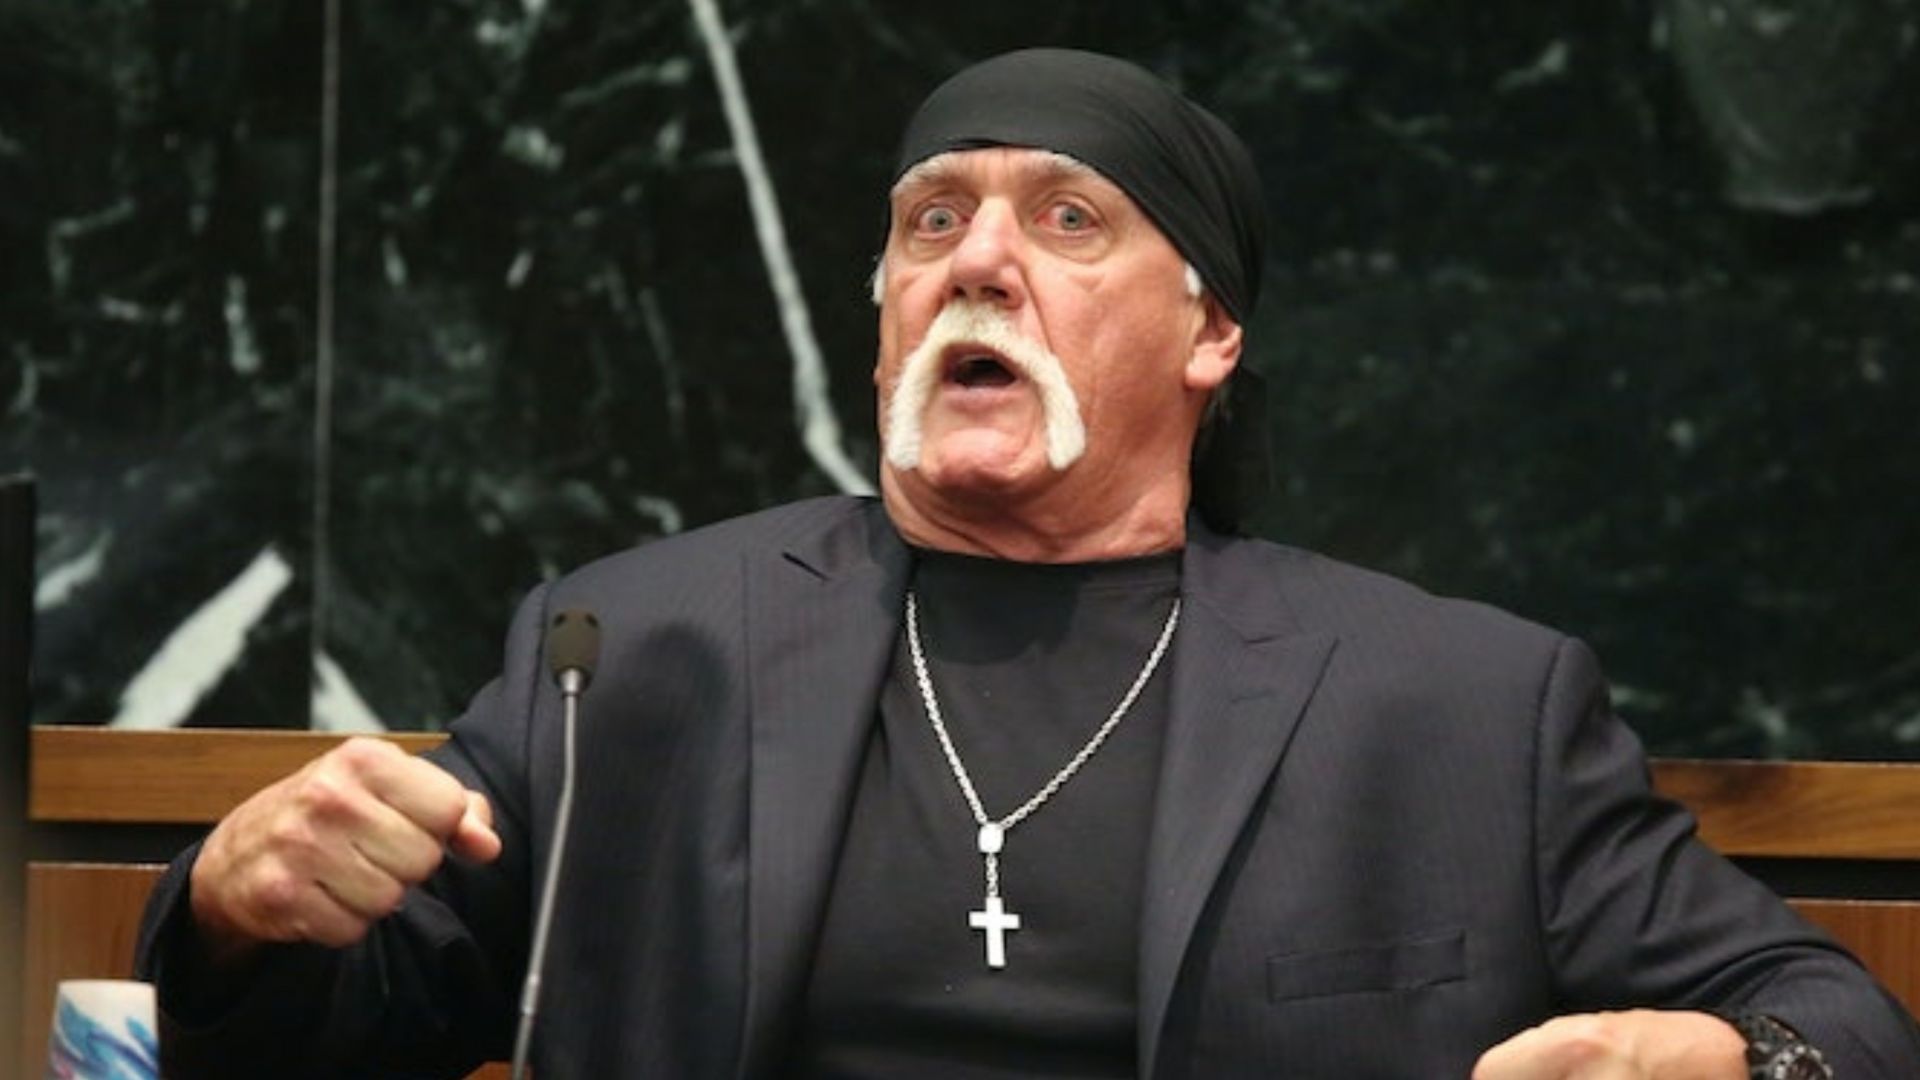 WWE Hall of Famer Hulk Hogan had a multi-year run in WCW